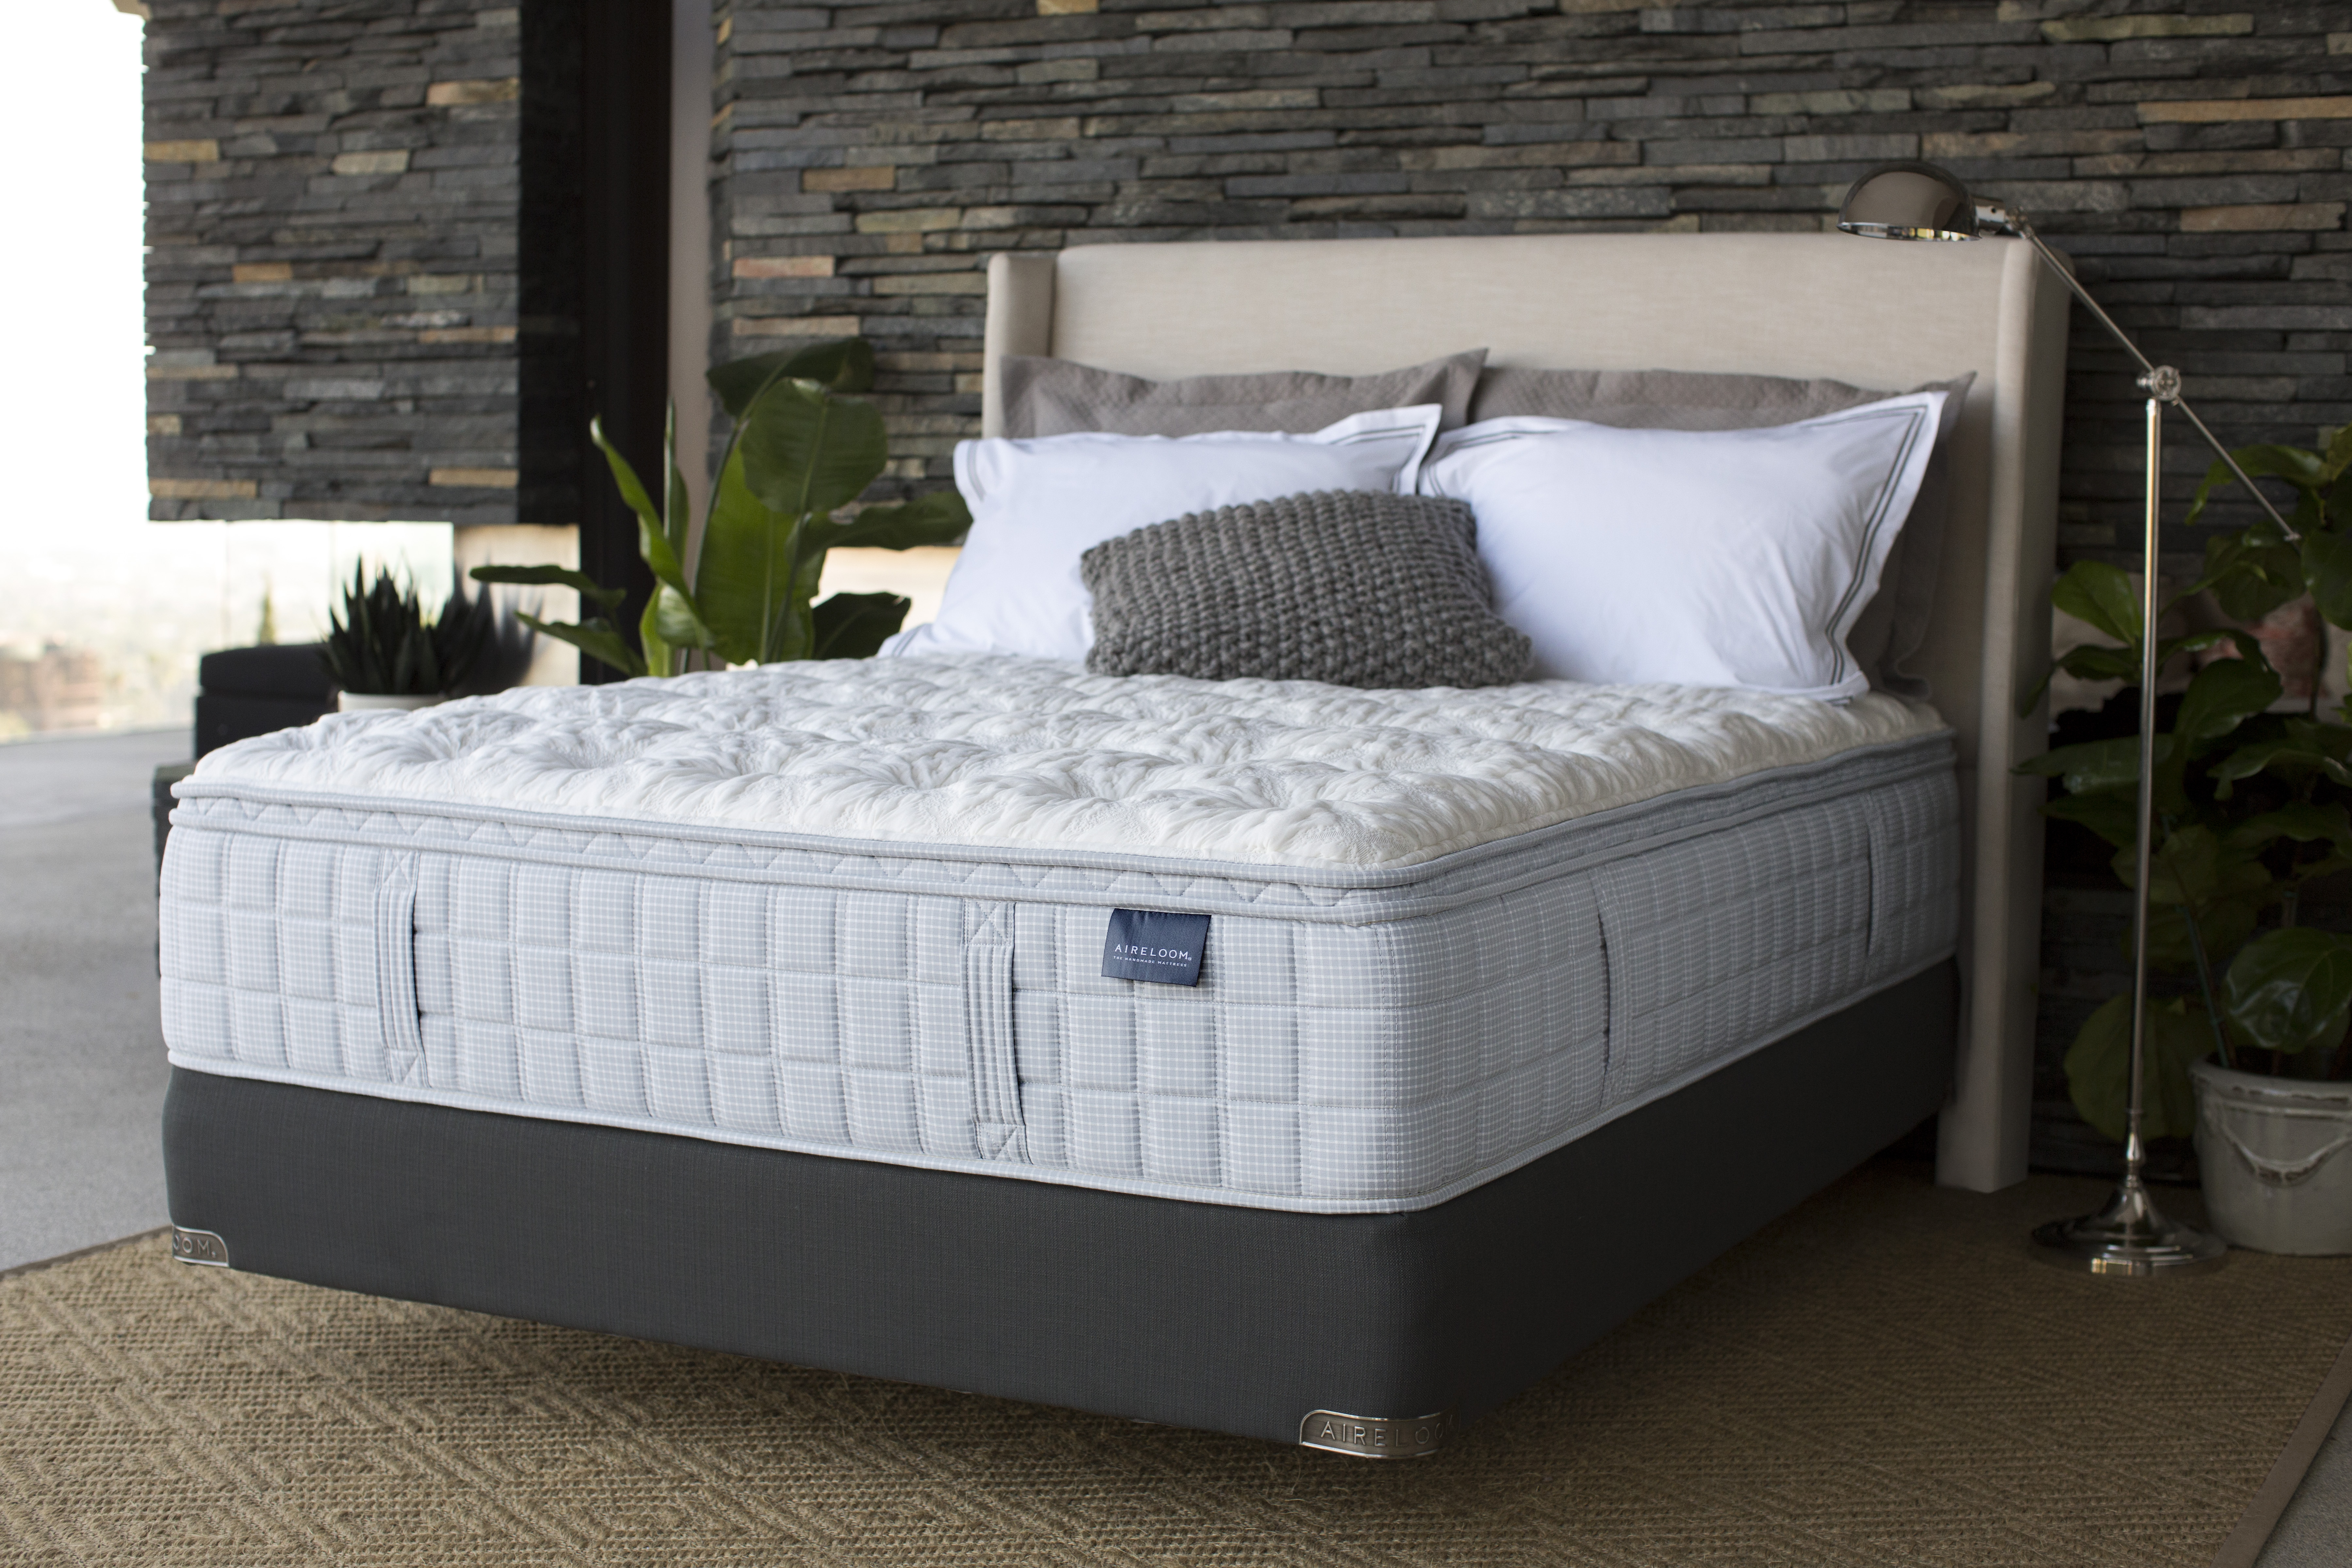 aireloom mattress review reddit